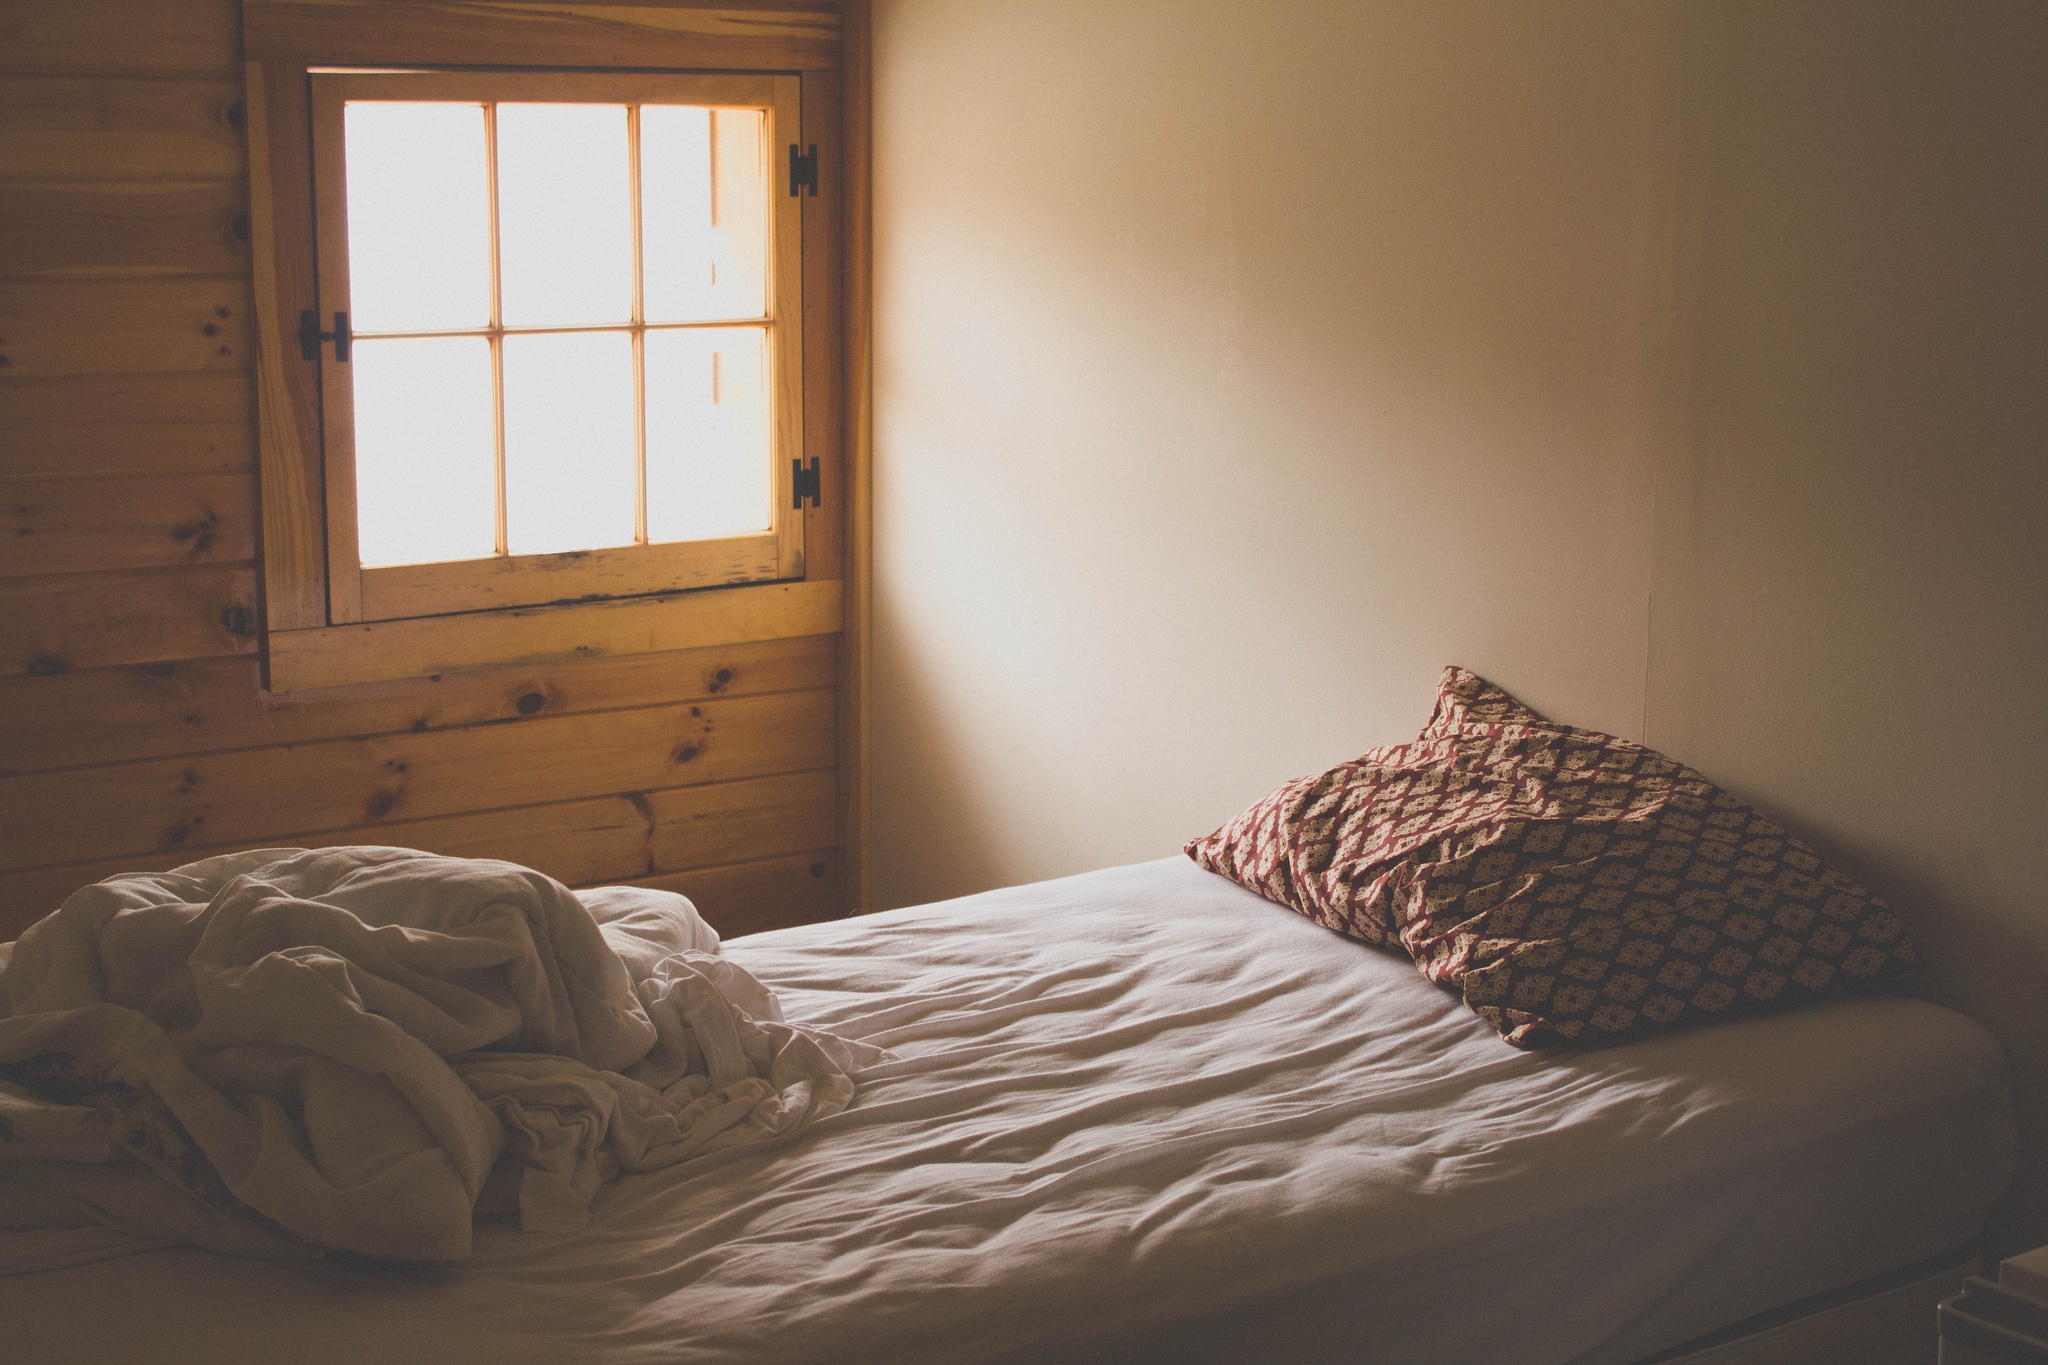 The Benefits And Drawbacks To Your Preferred Sleep Position